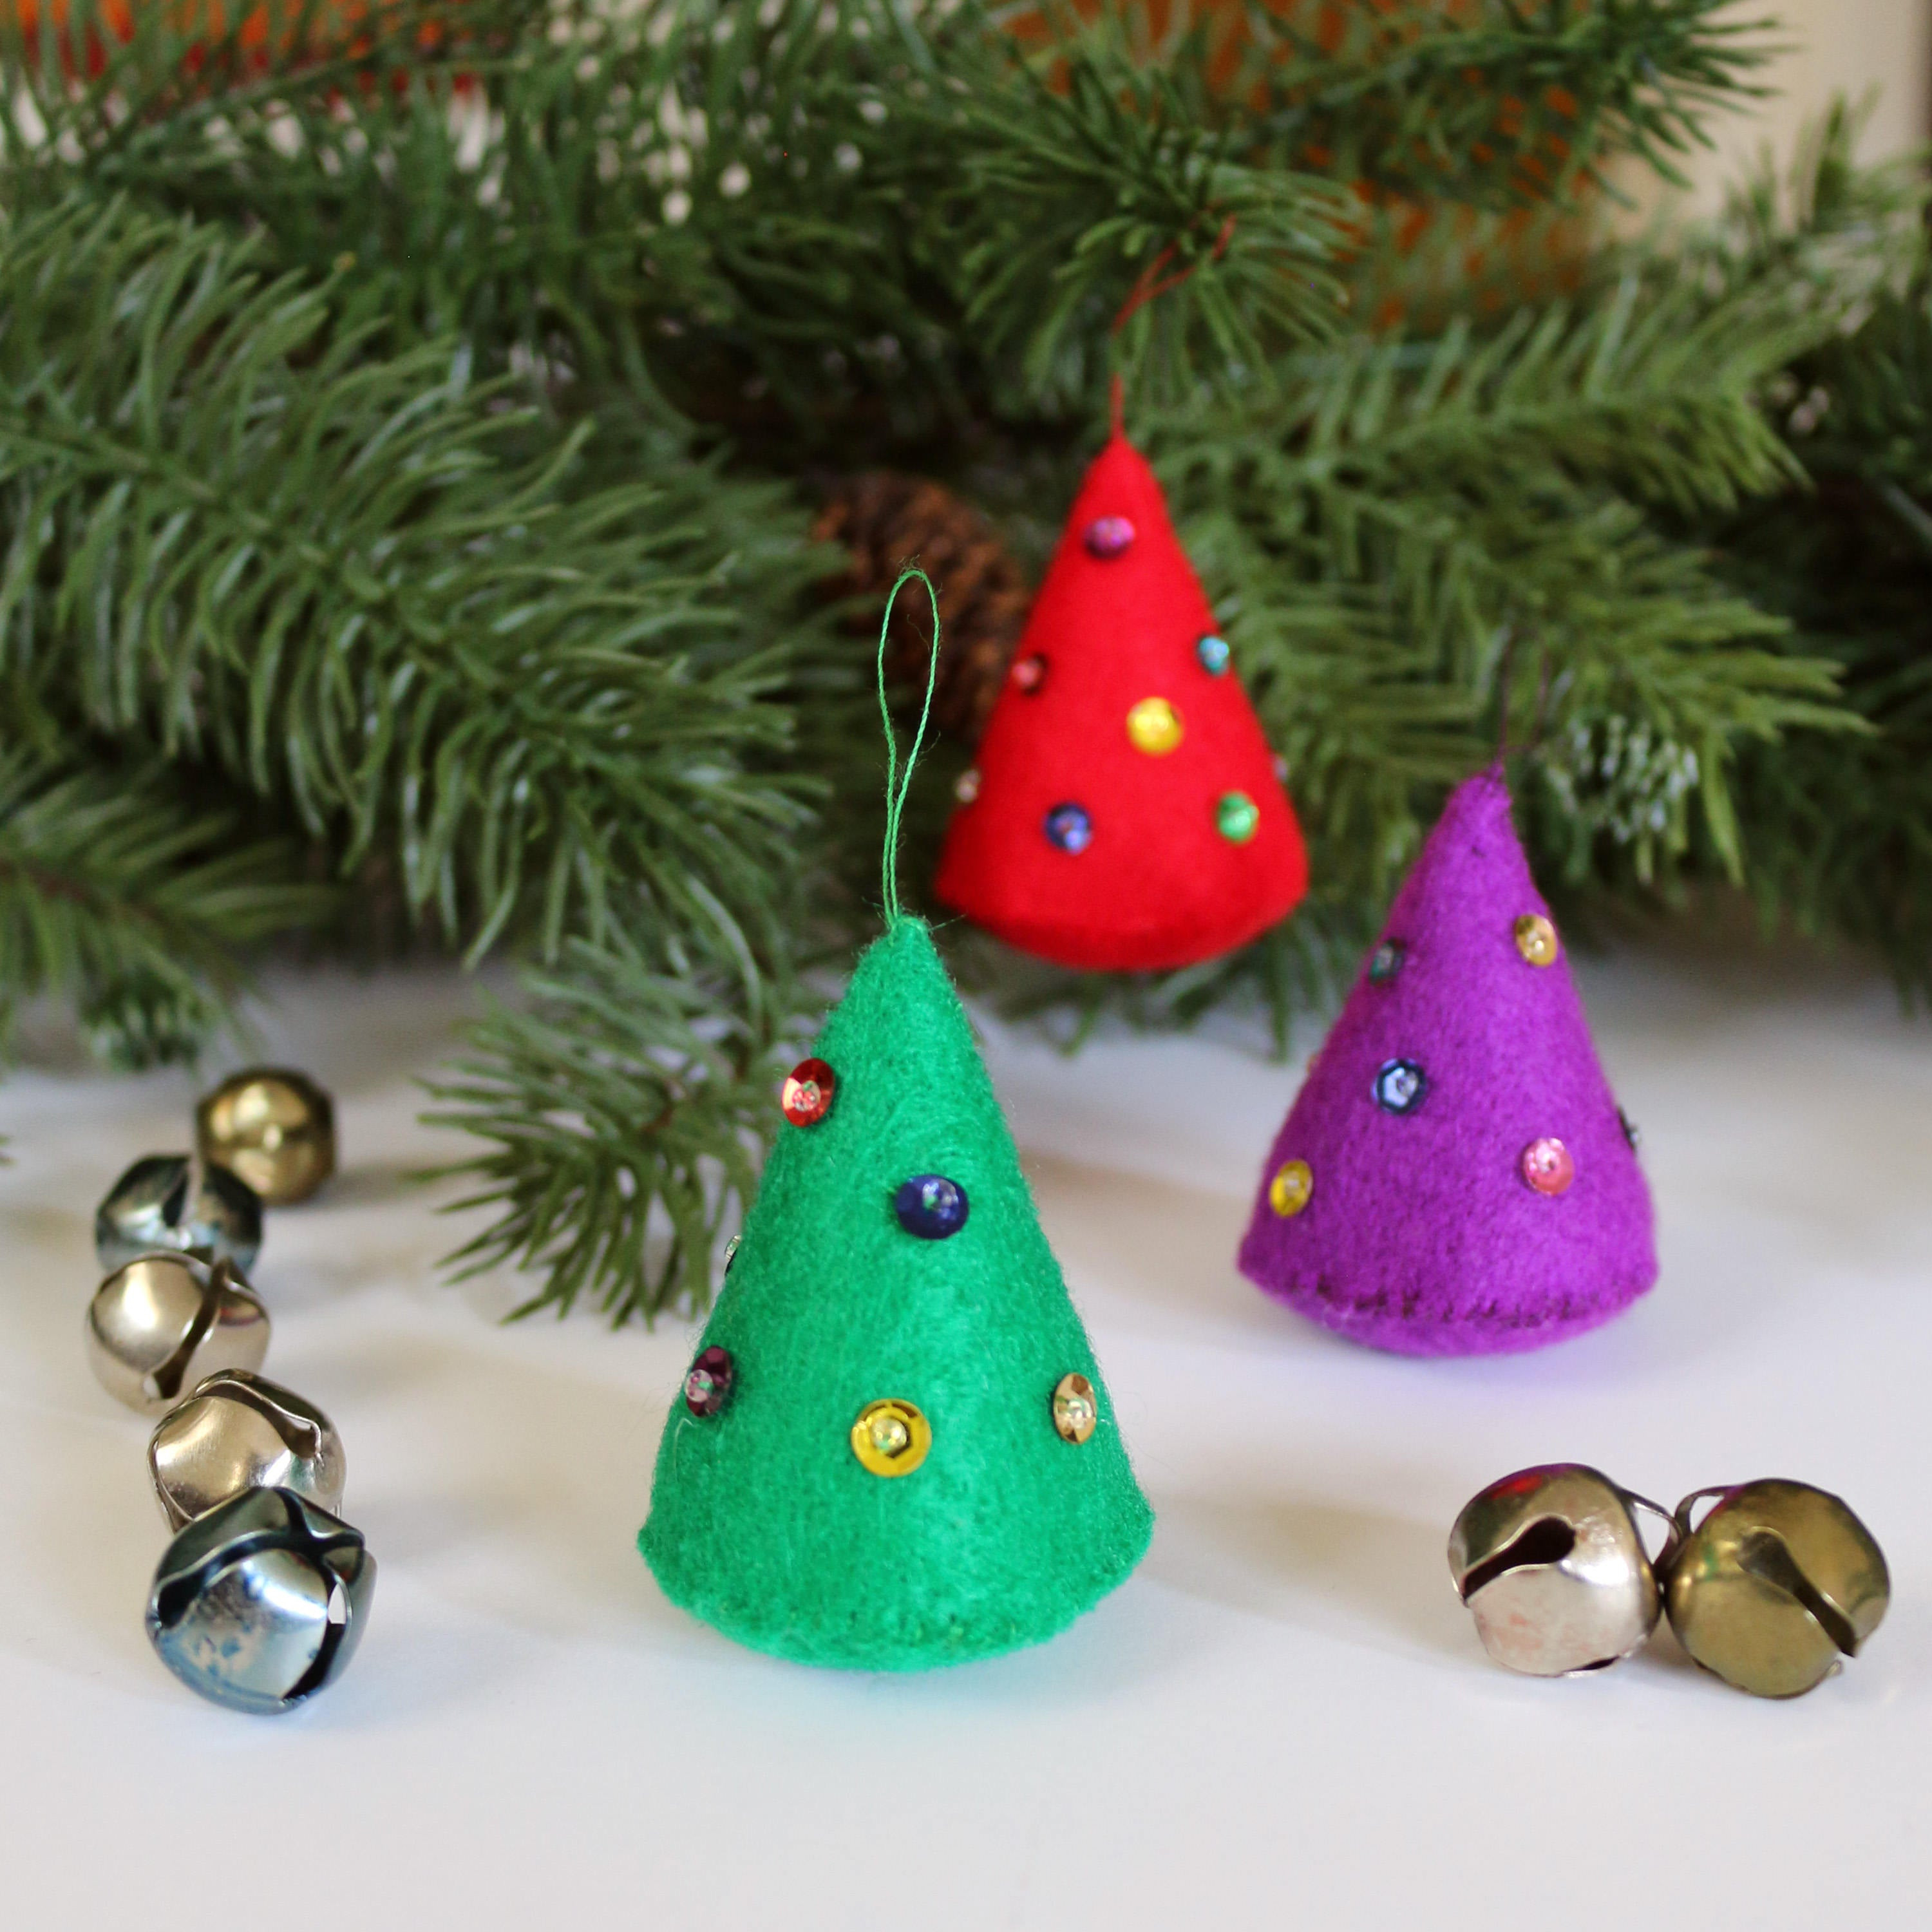 DIY Felt Christmas Ornaments
 DIY Felt Christmas Tree Ornament Kit